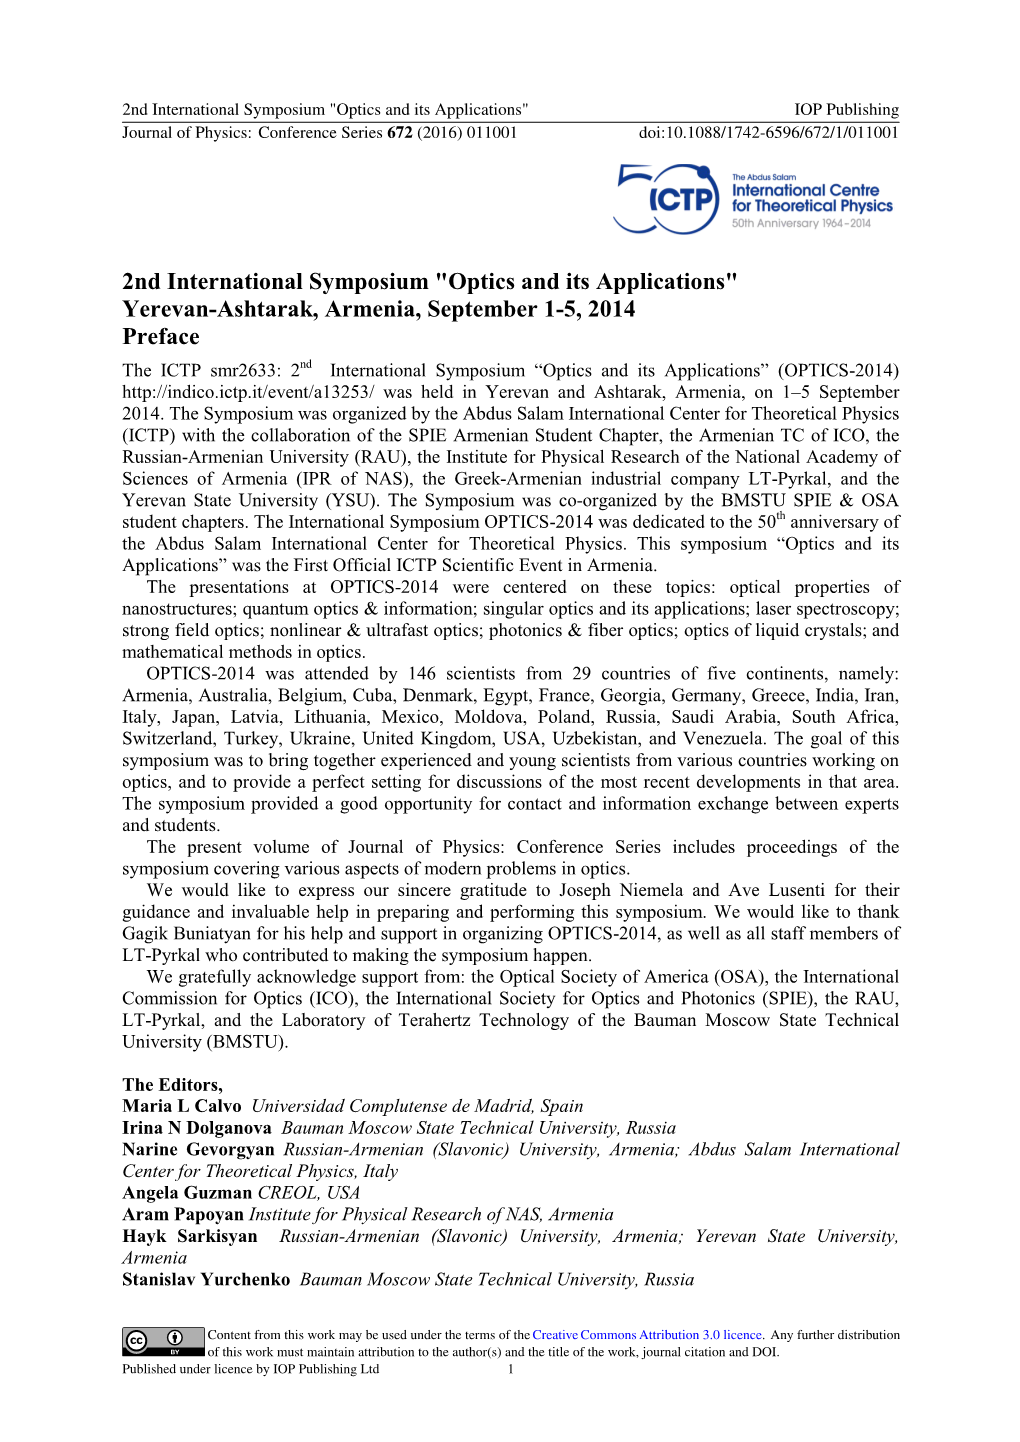 2Nd International Symposium "Optics and Its Applications" Yerevan